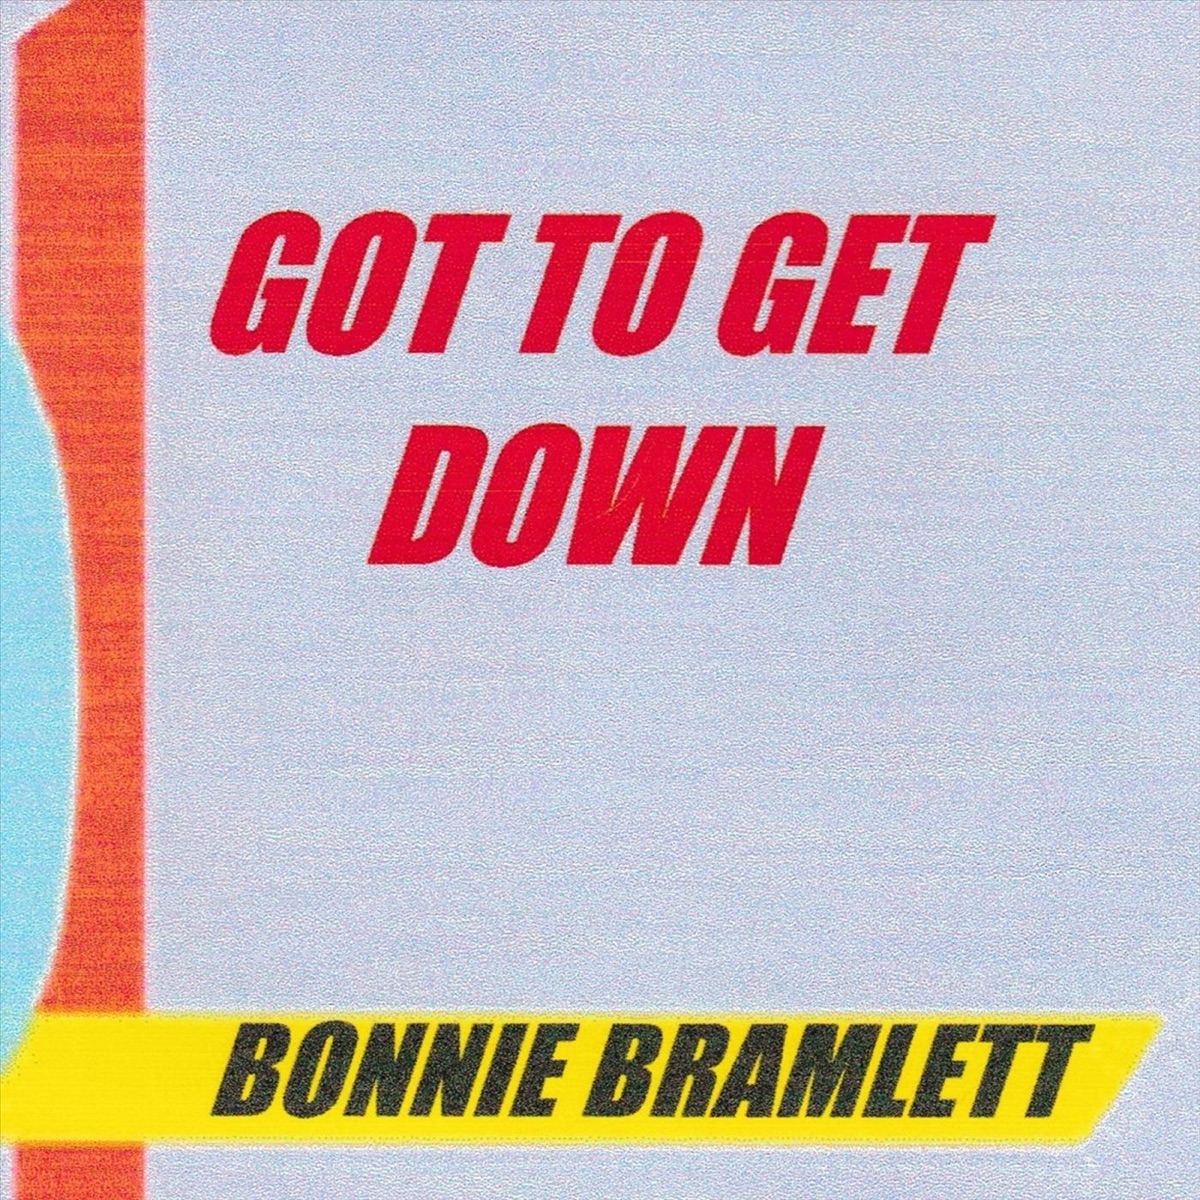 Roots, Blues & Jazz - Album by Bonnie Bramlett - Apple Music